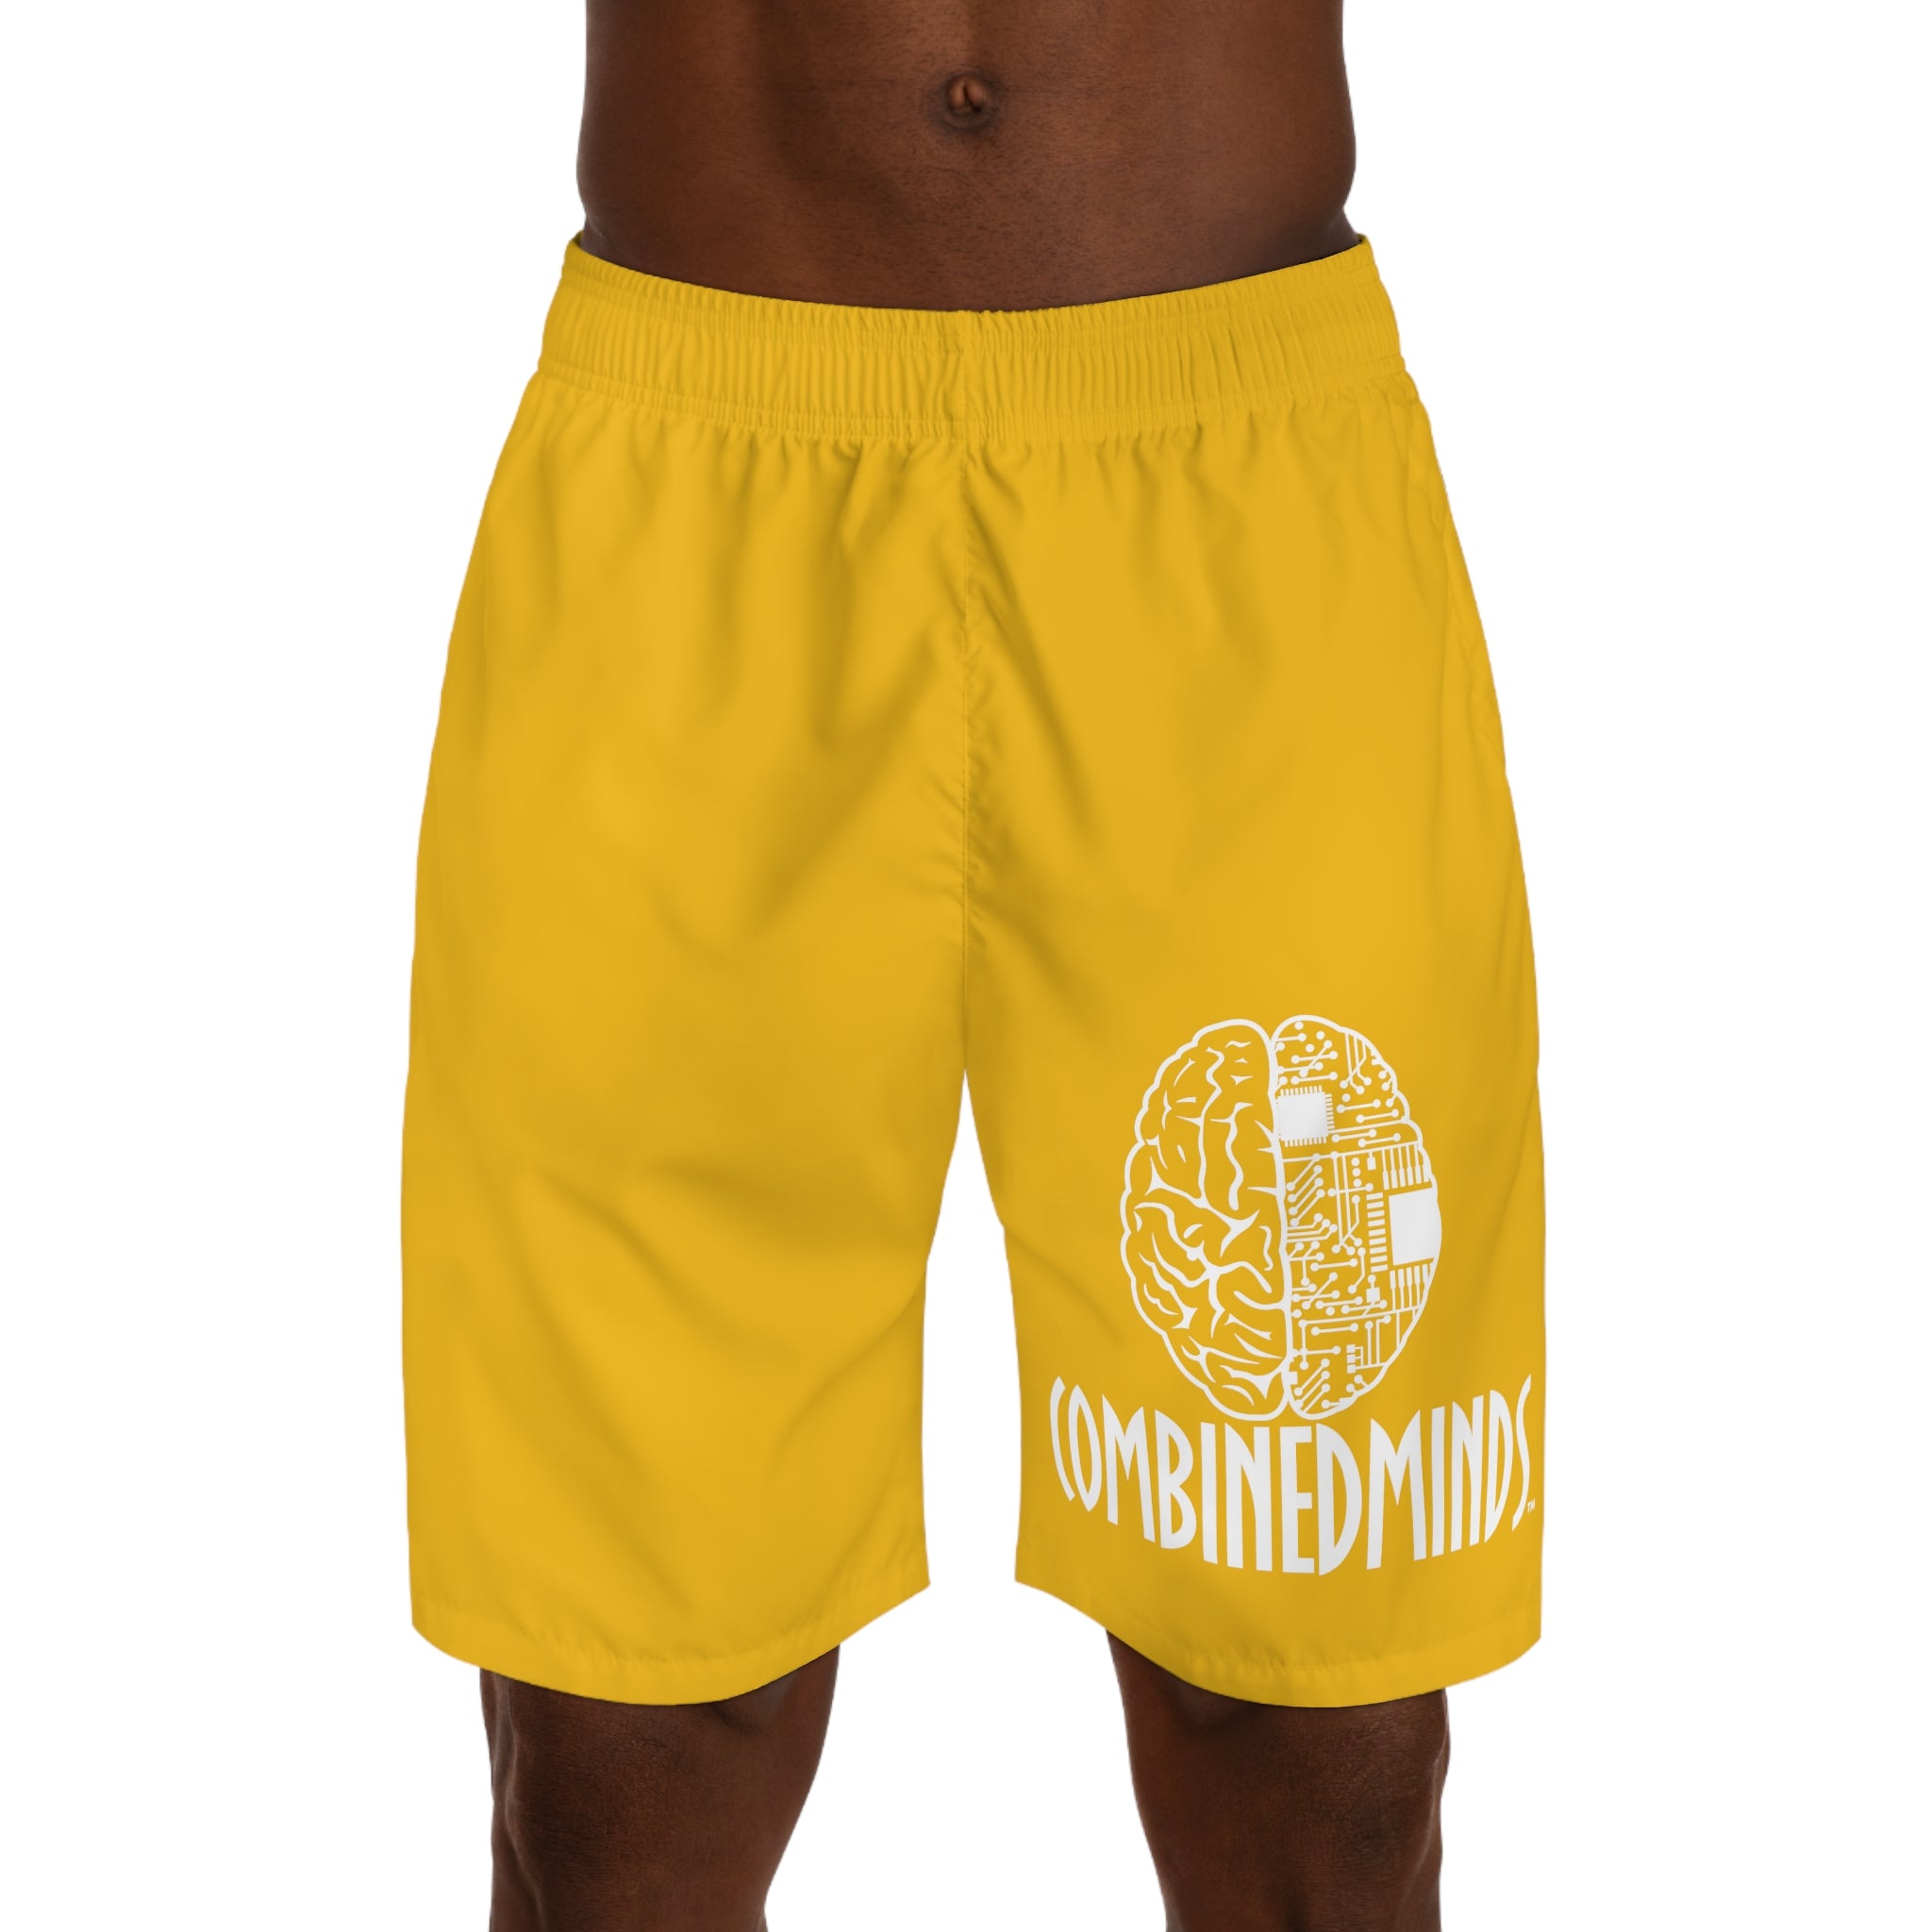 CombinedMinds Men's Jogger Shorts Yellow/White Logo